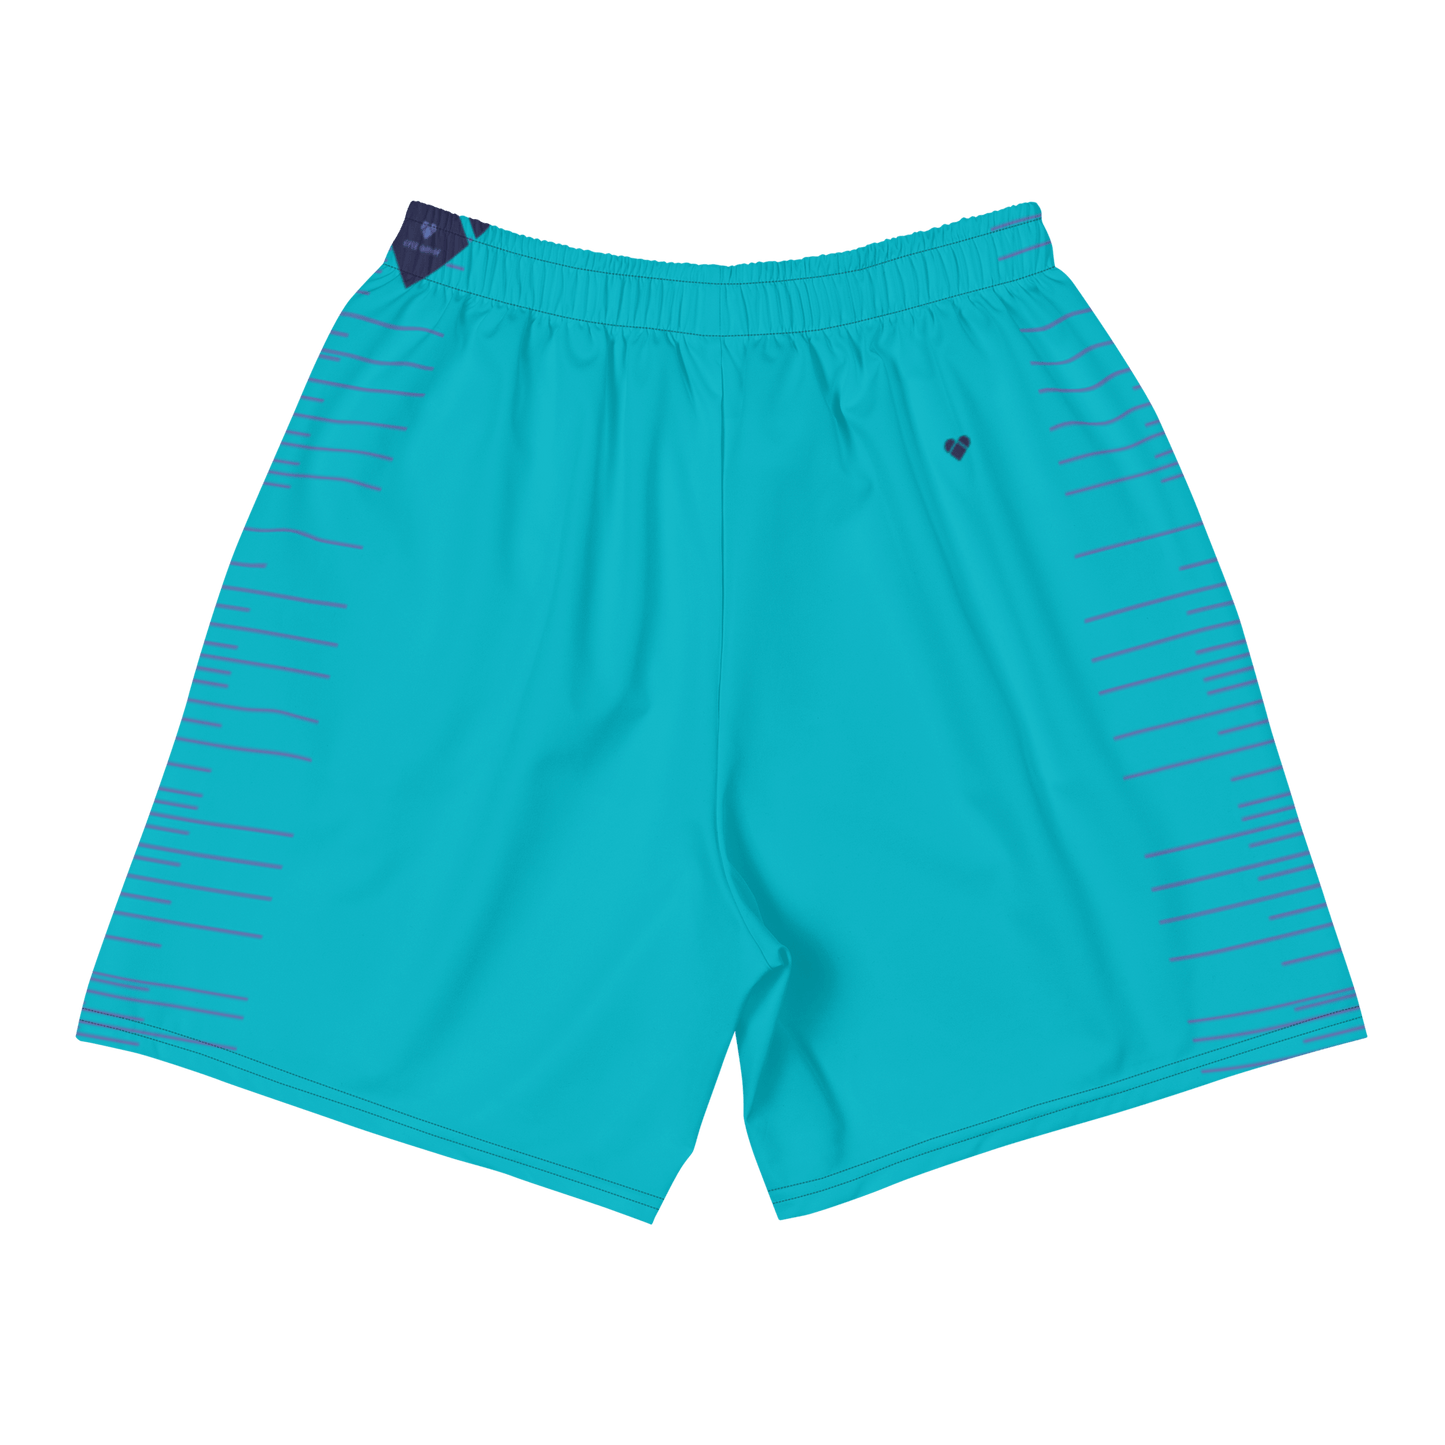 Men's vibrant sport shorts with periwinkle gradient stripes - CRiZ AMOR's empowerment